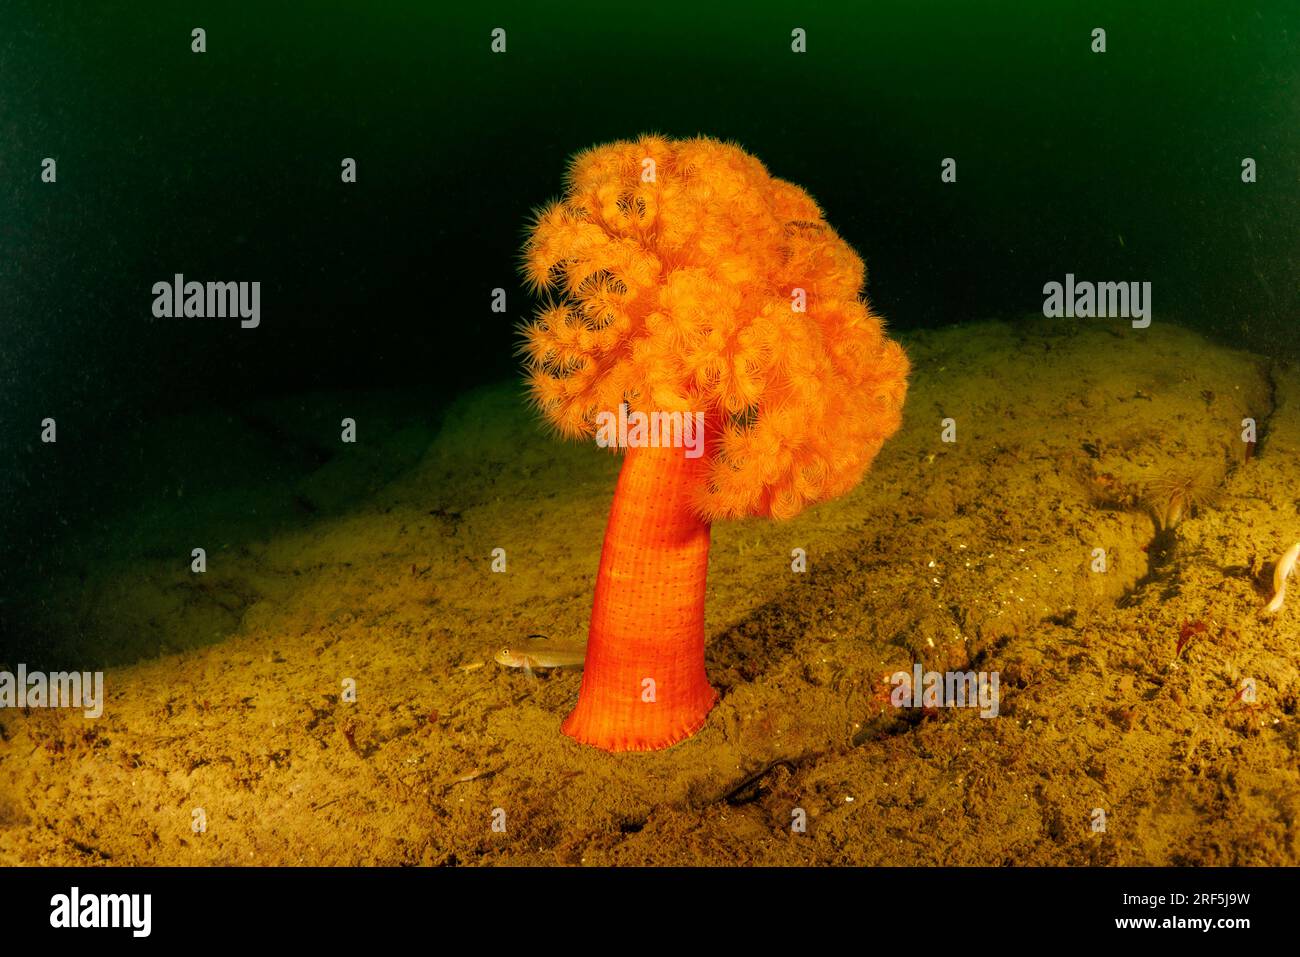 Un anemone plumose solitario di arancia, Metridium senile, nell'Oceano Pacifico nordoccidentale, Columbia Britannica, Canada. Foto Stock